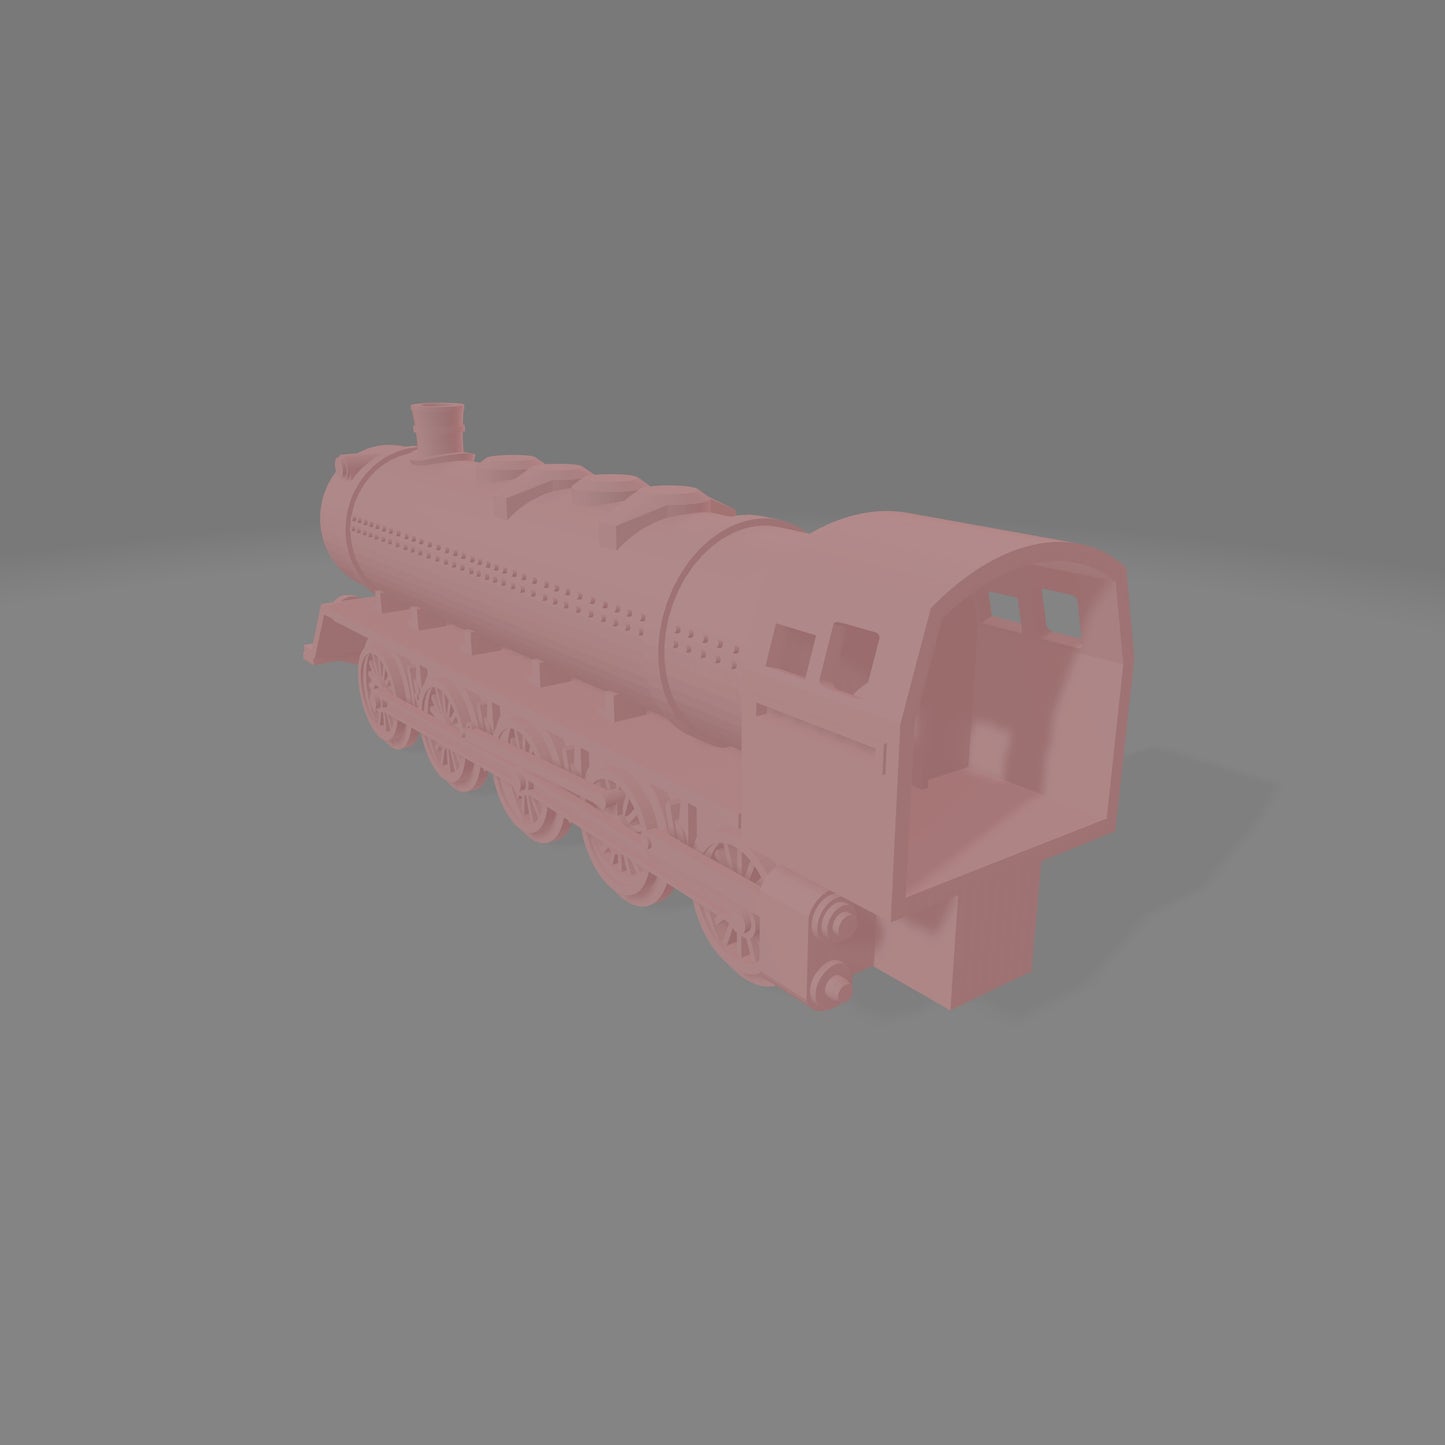 Engine Locomotive - Commissioned